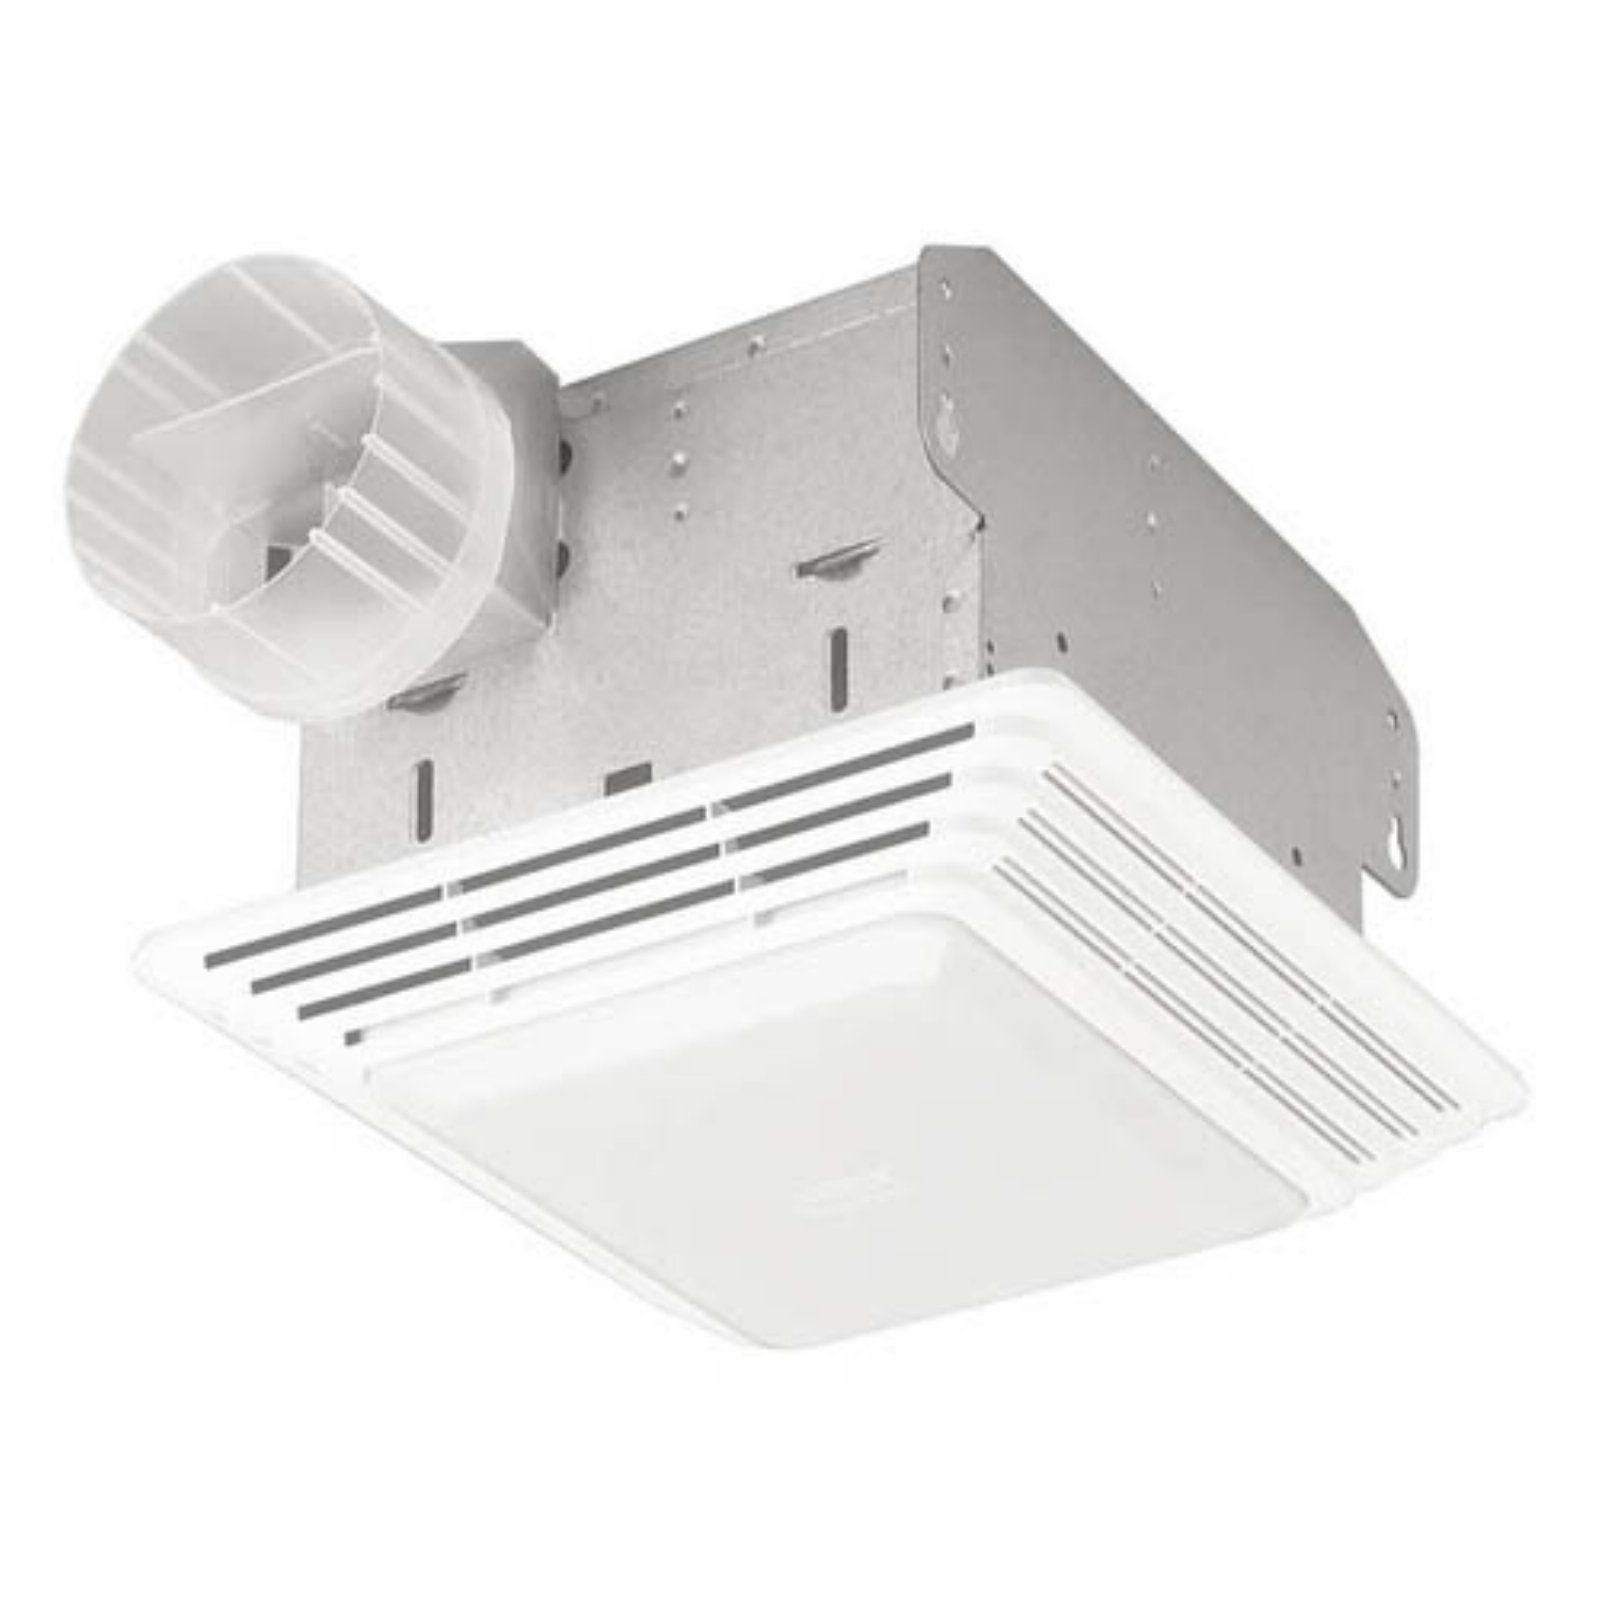 Broan Nutone 678 Bathroom Ventilation Fan Light In 2019 within dimensions 1600 X 1600